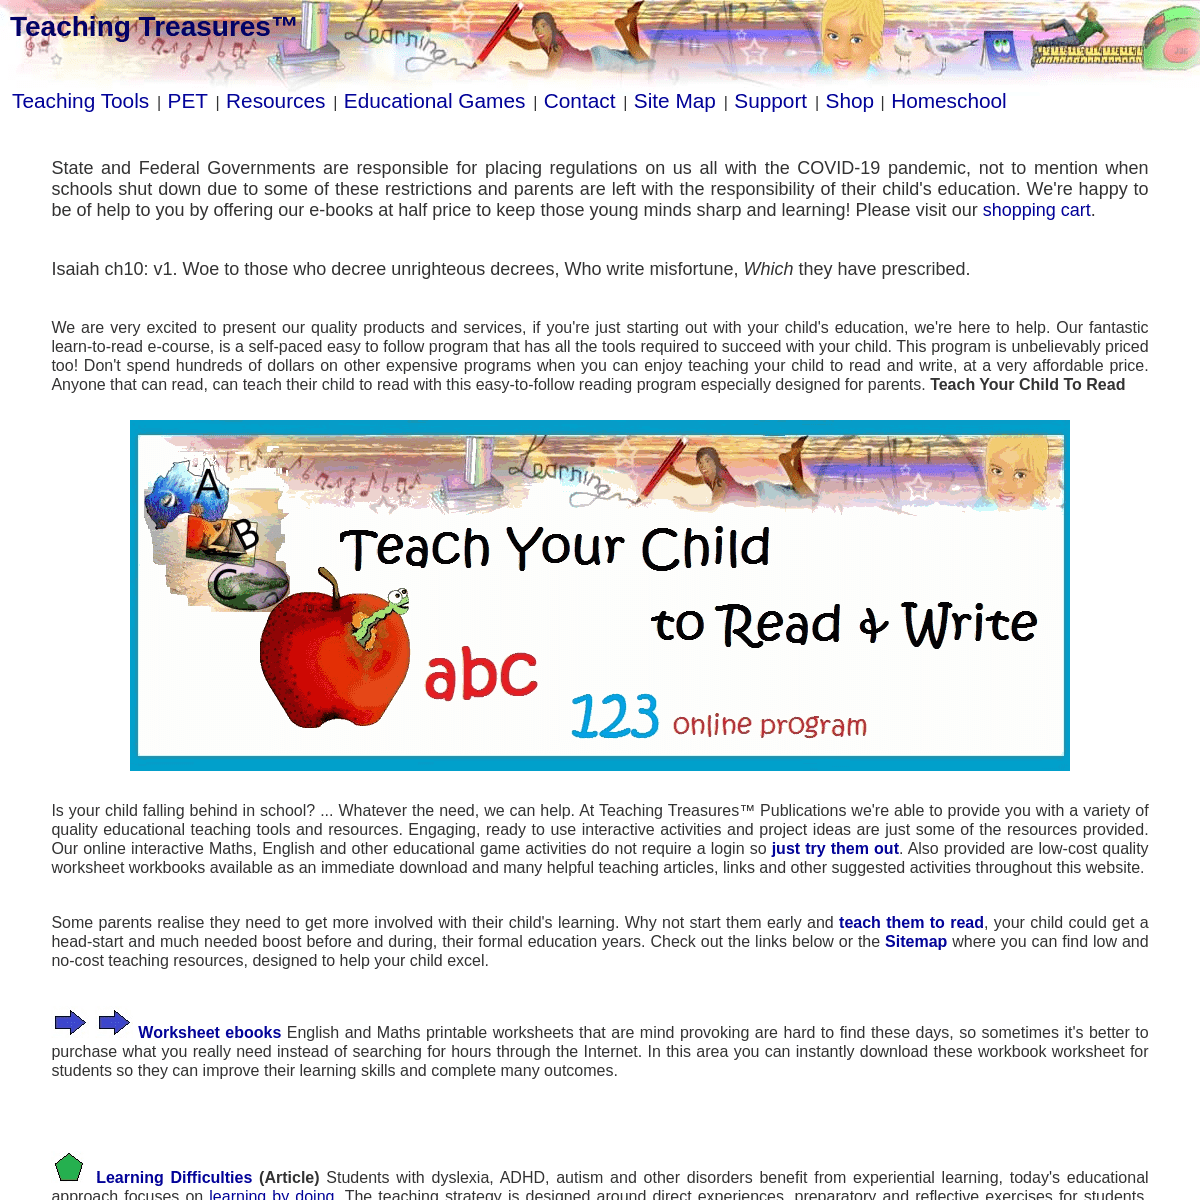 A complete backup of https://teachingtreasures.com.au